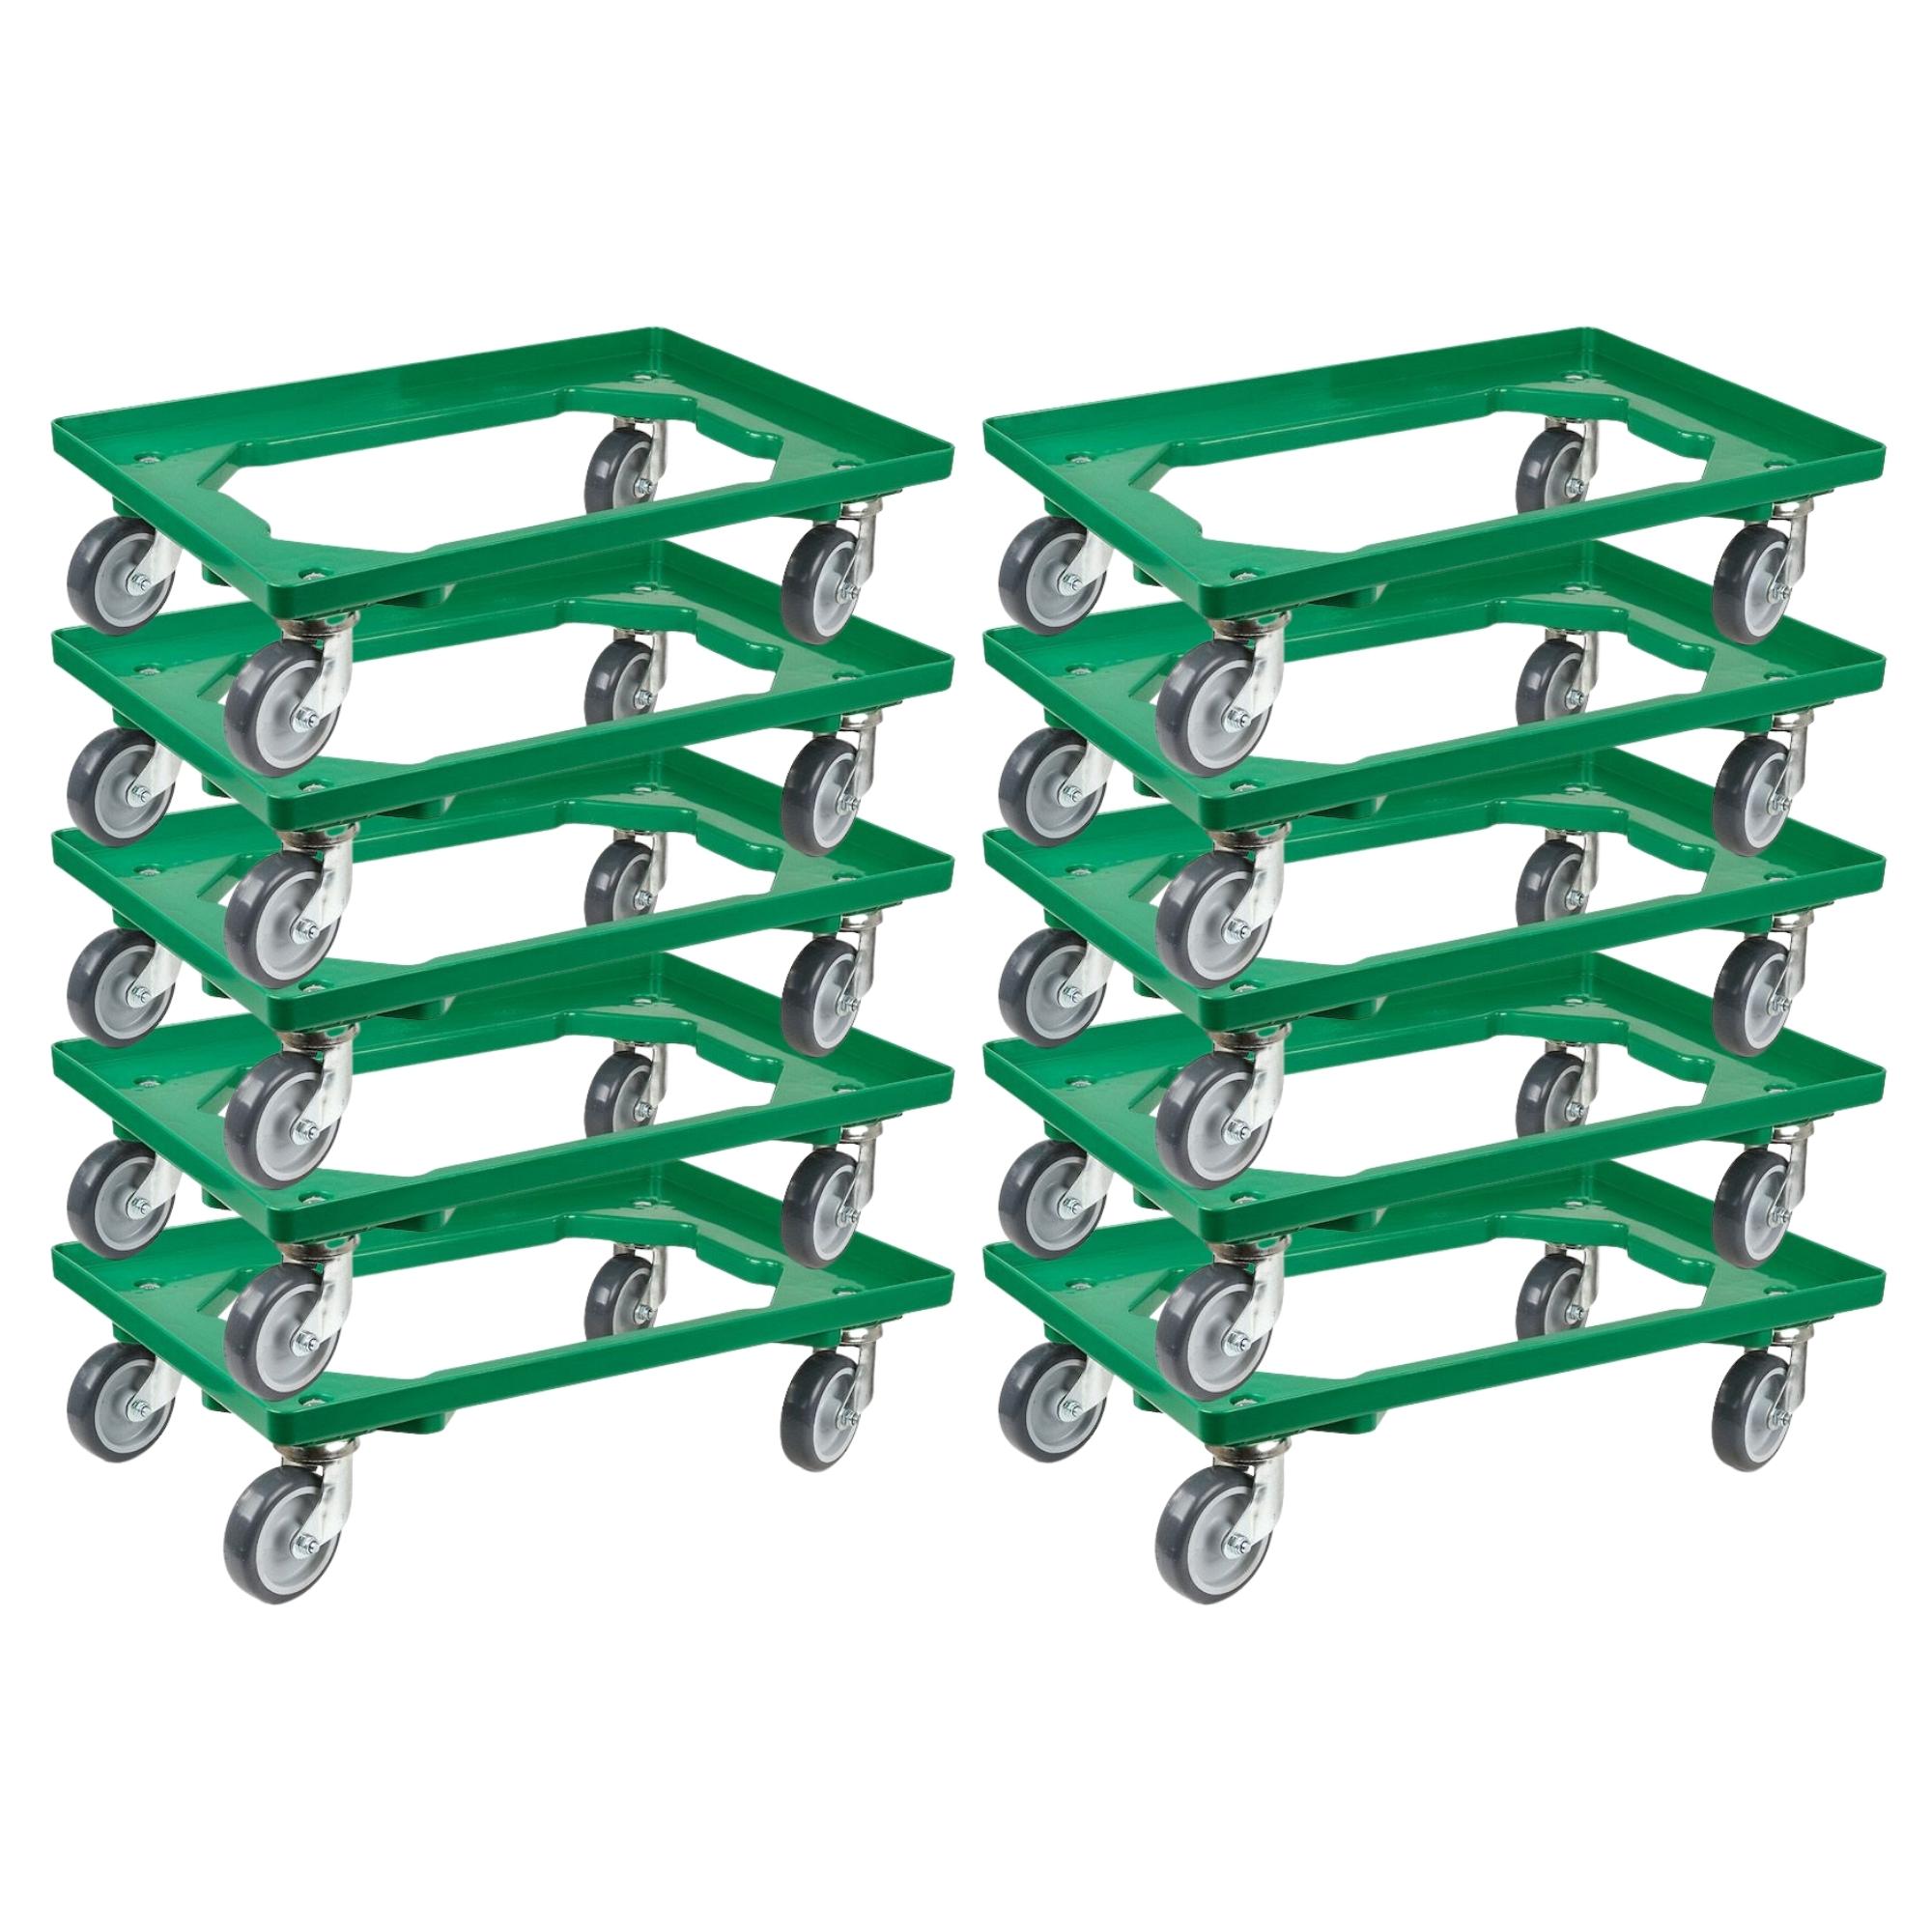 SparSet 10x Transportroller für Euroboxen 60x40cm mit Gummiräder grün | Offenes Deck | 2 Lenkrollen & 2 Bremsrollen | Traglast 300kg | Kistenroller Logistikroller Rollwagen Profi-Fahrgestell